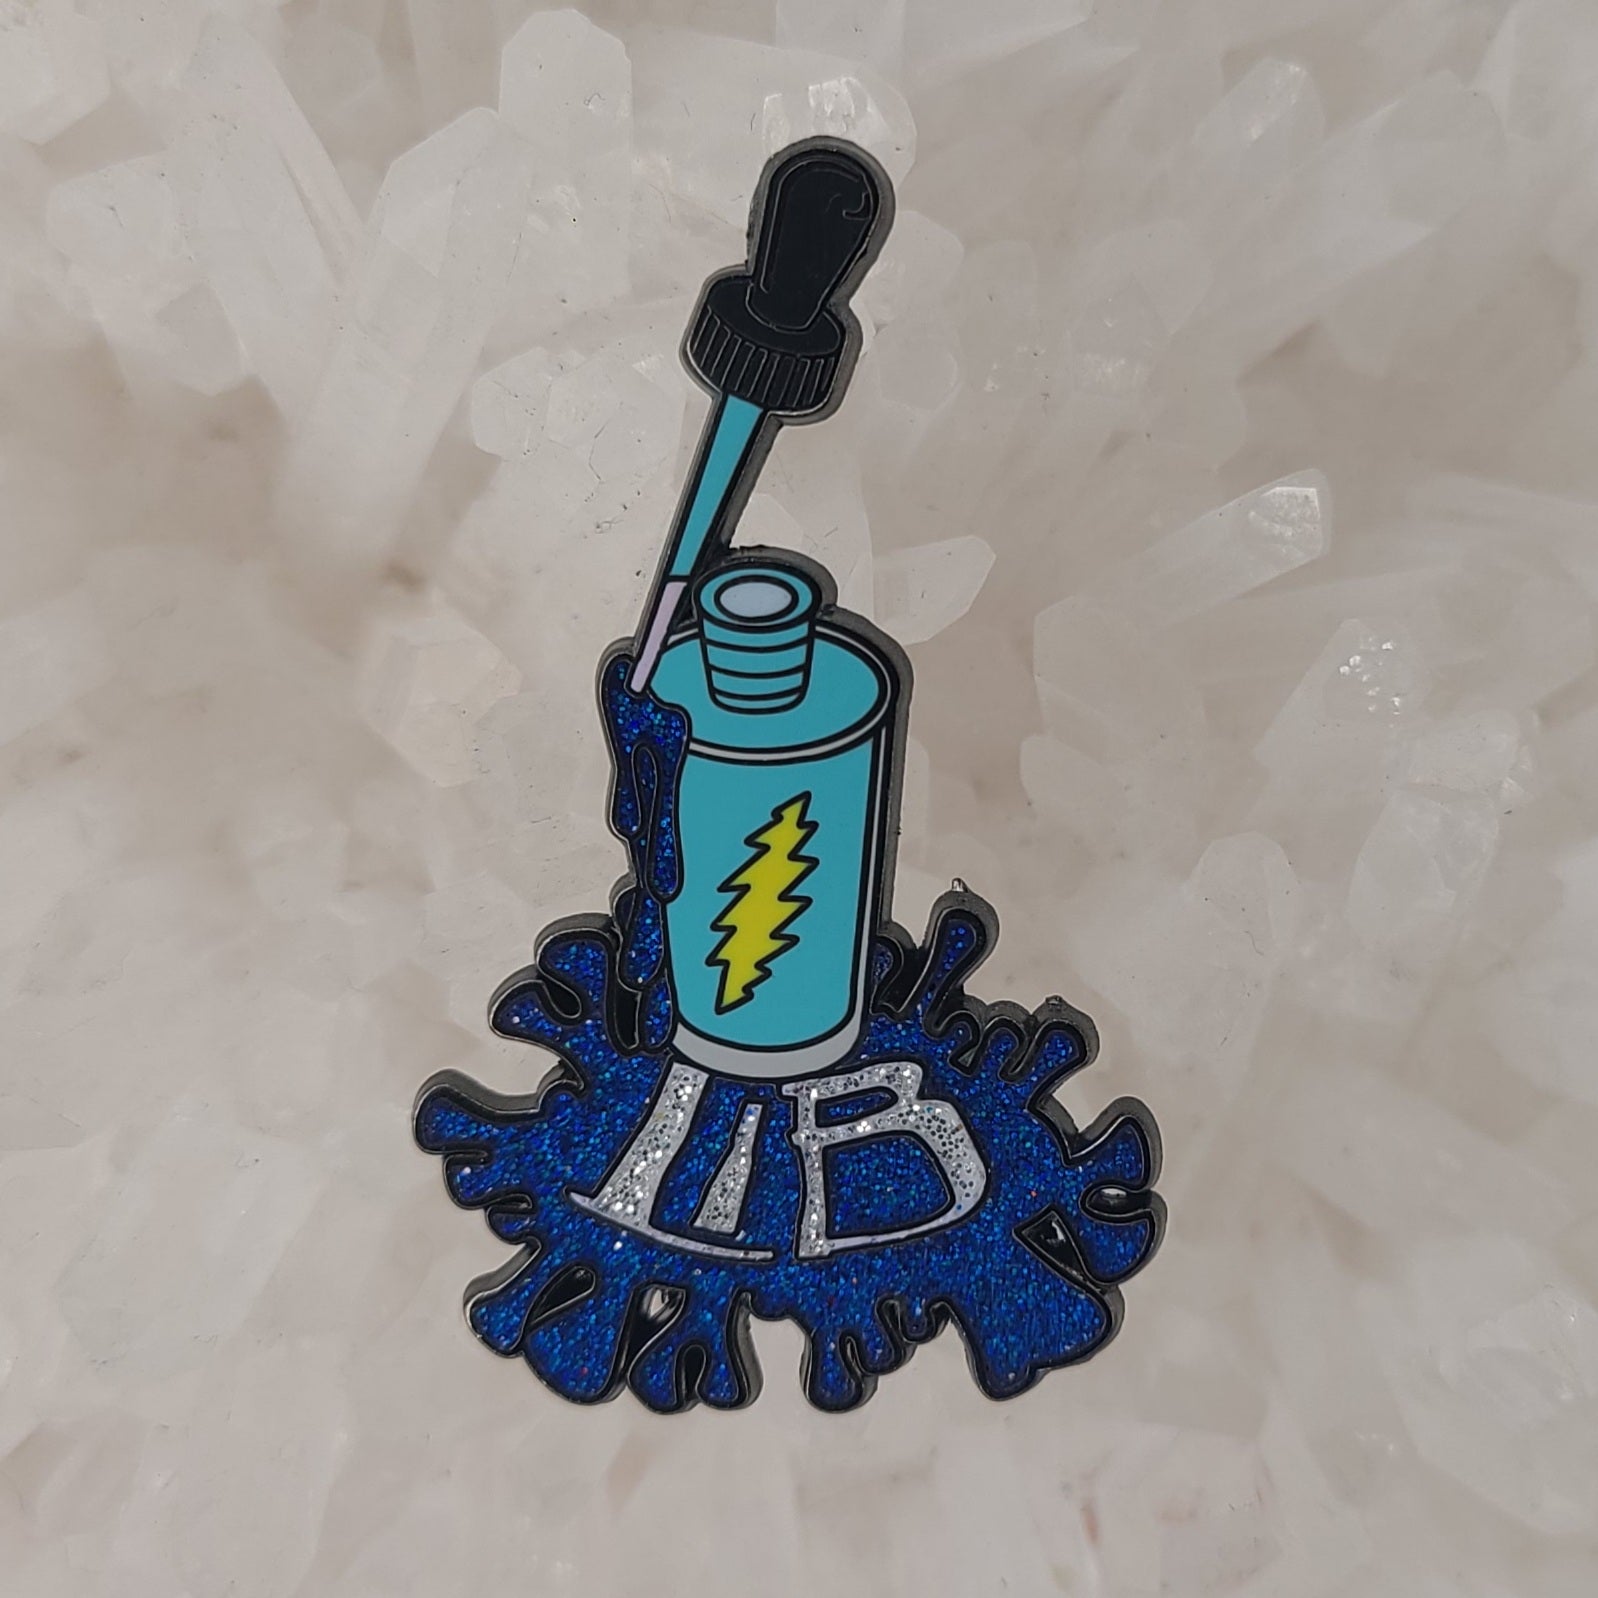 Lightning In a Bottle Festival Dead Lot Forever Grateful LSD Dropper Blue Enamel Pins Hat Pins Lapel Pin Brooch Badge Festival Pin